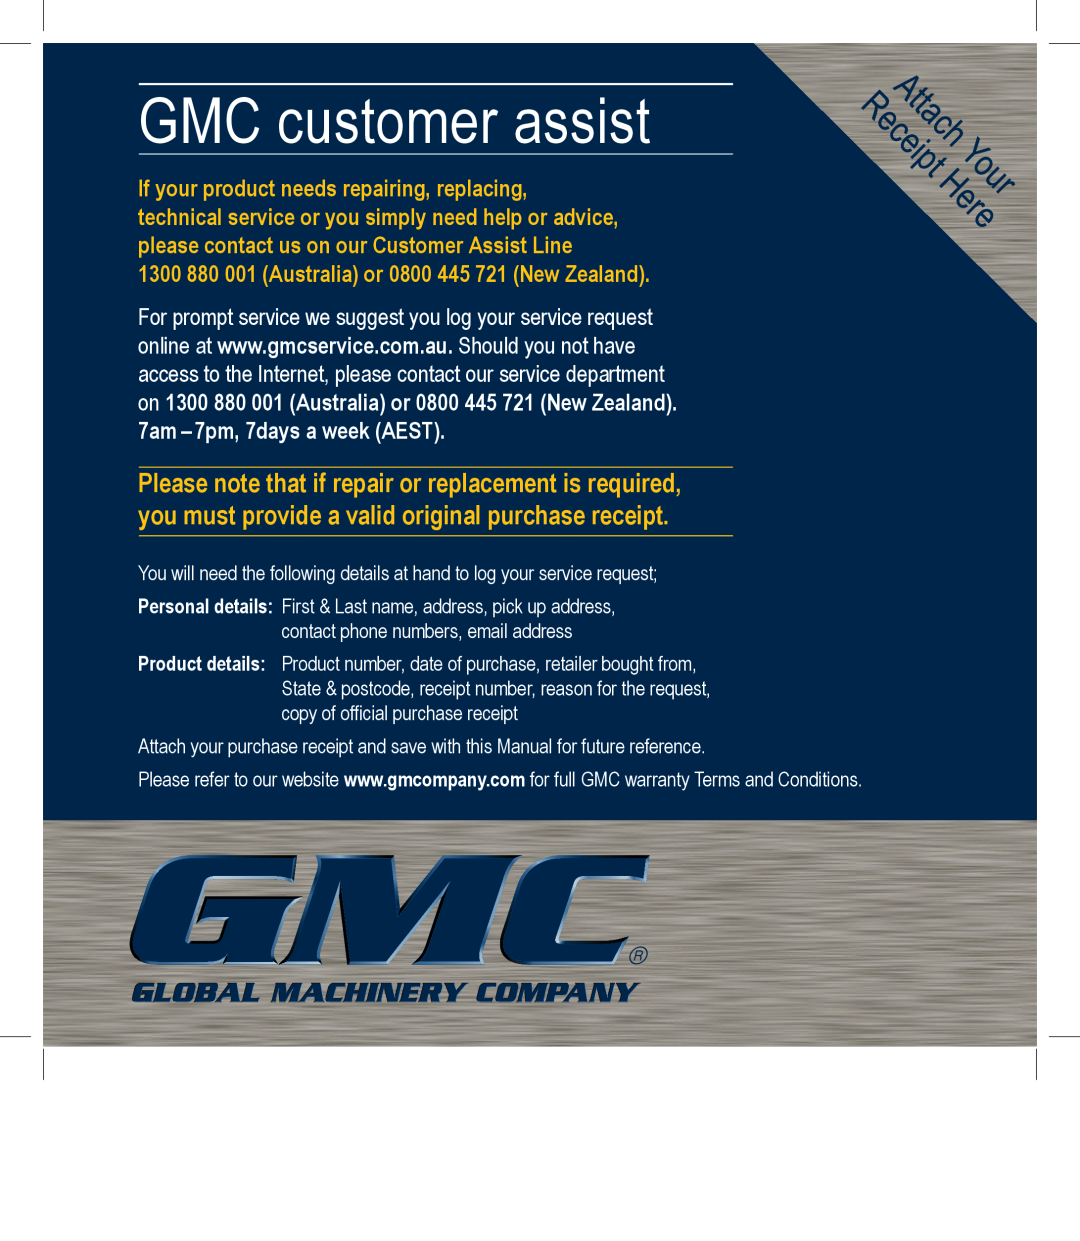 Global Machinery Company EDG3 instruction manual GMC customer assist, 1300 880 001 Australia or 0800 445 721 New Zealand 